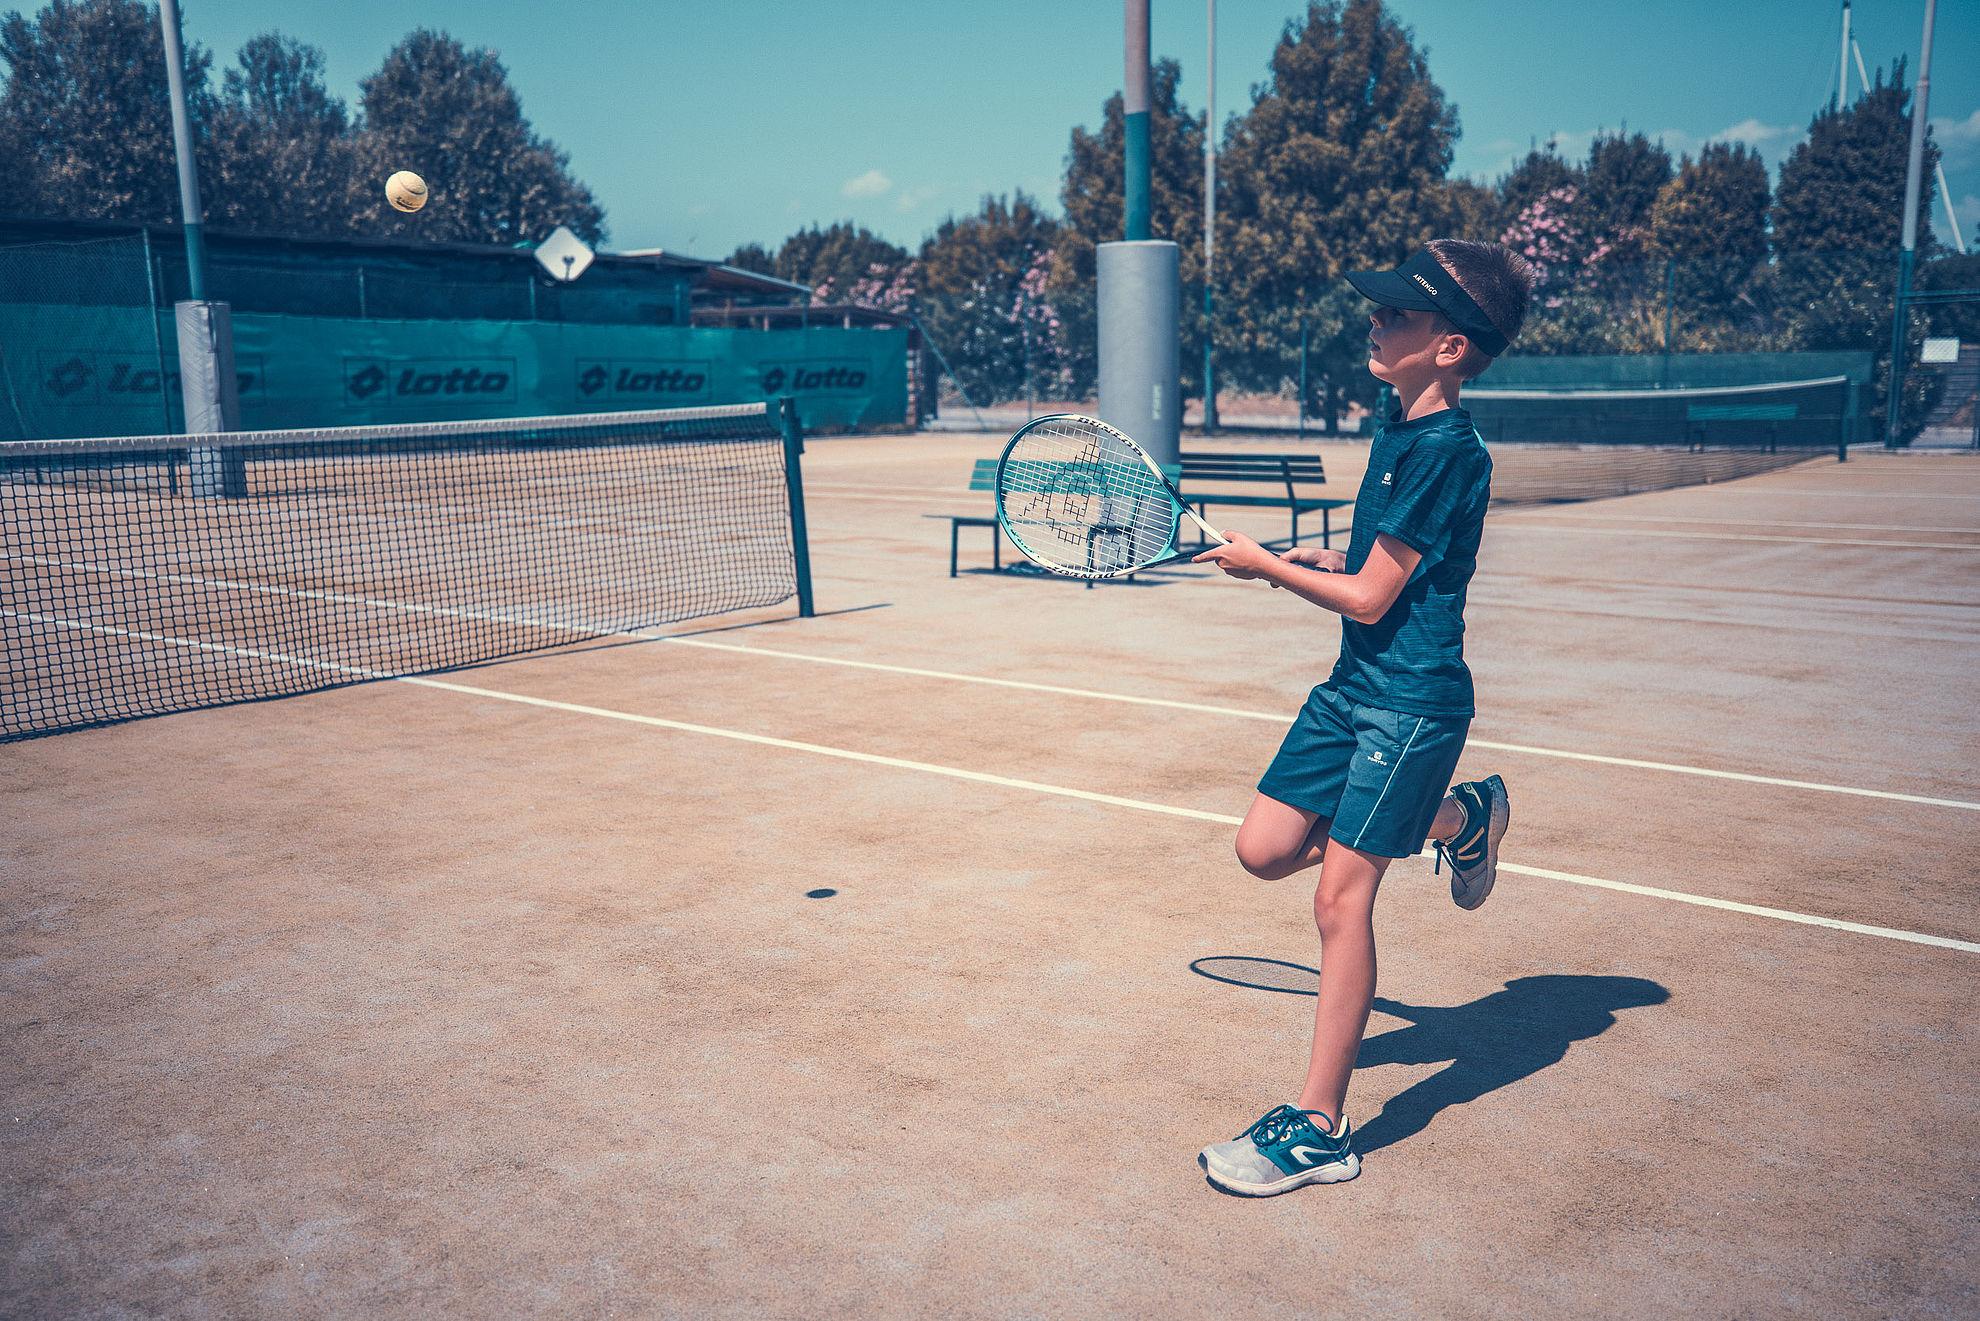 Boy playing tennis